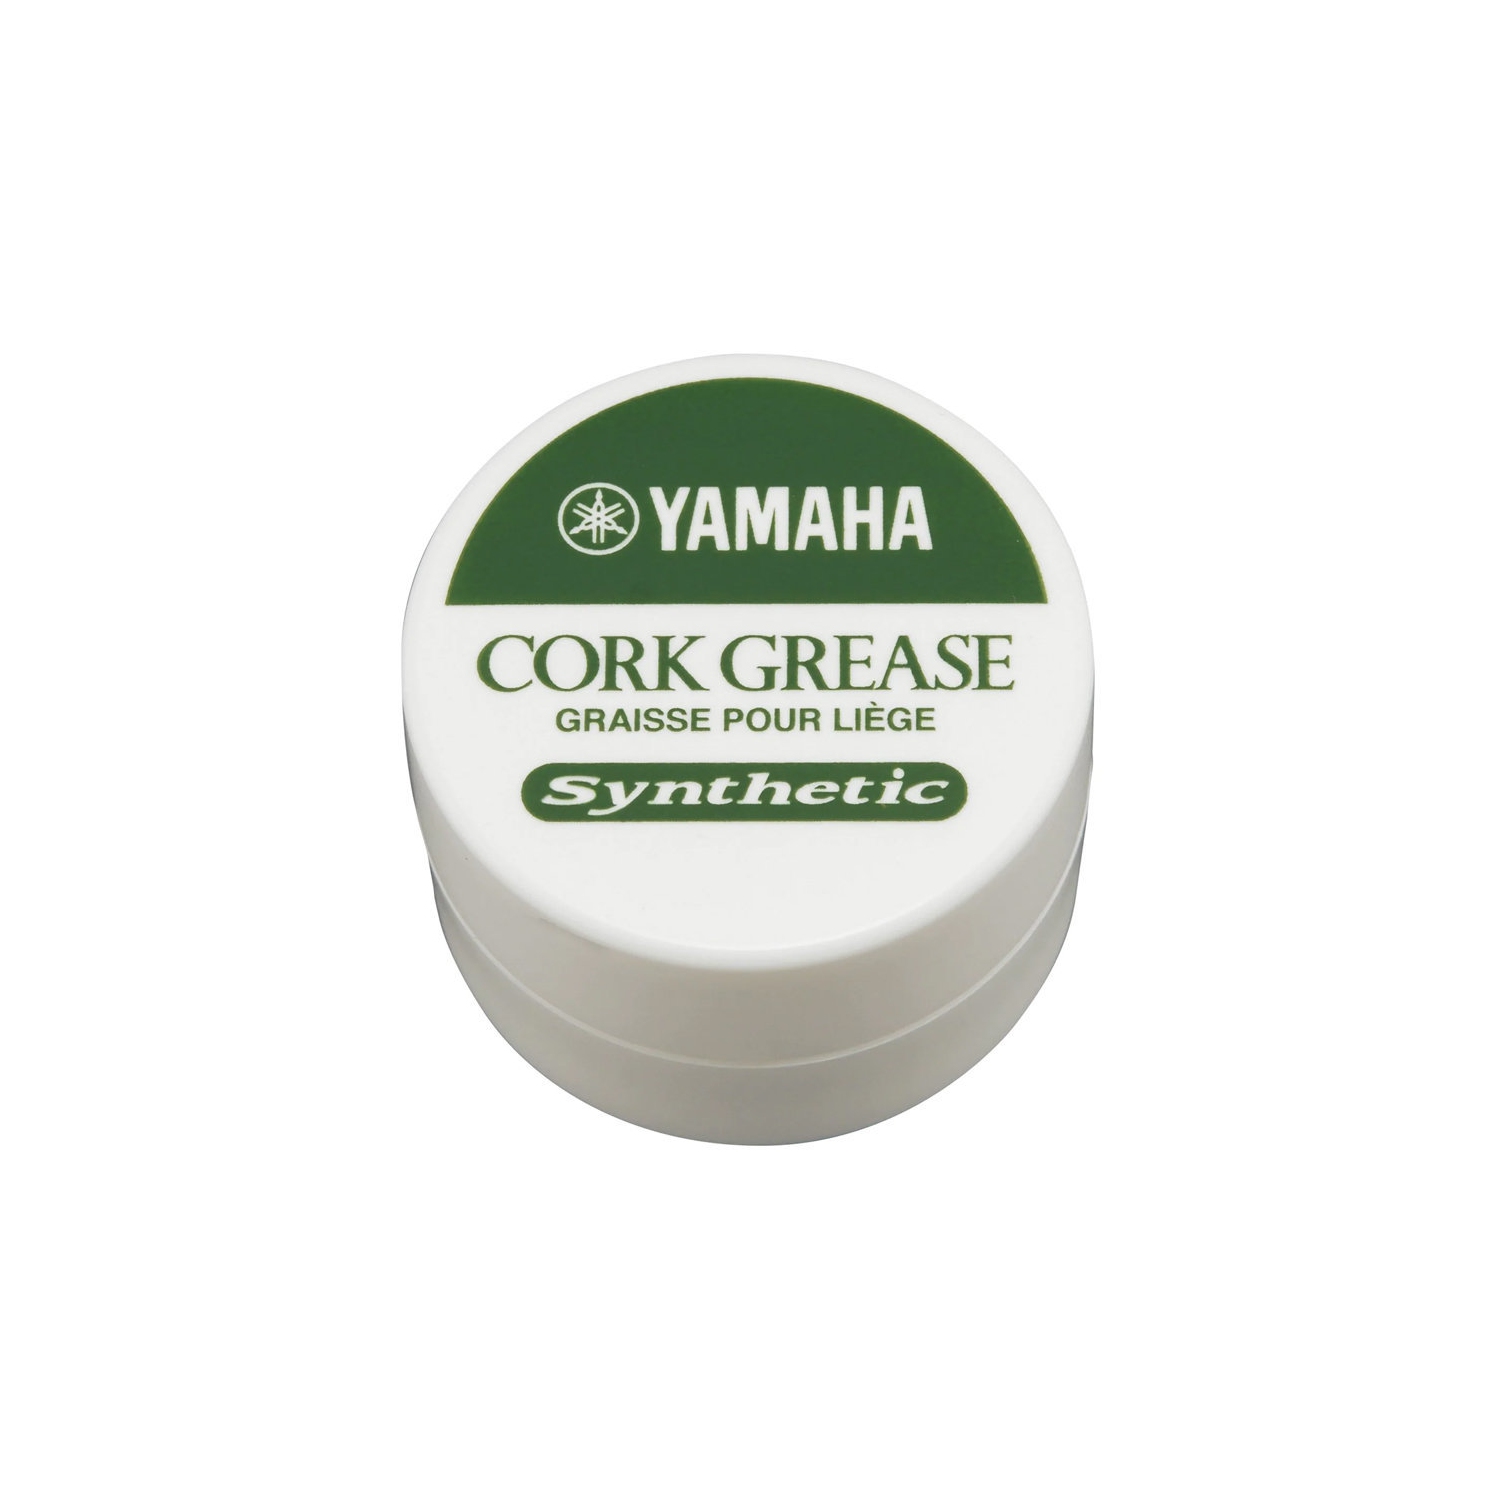 Yamaha Synthetic Cork Grease Tub - 10g